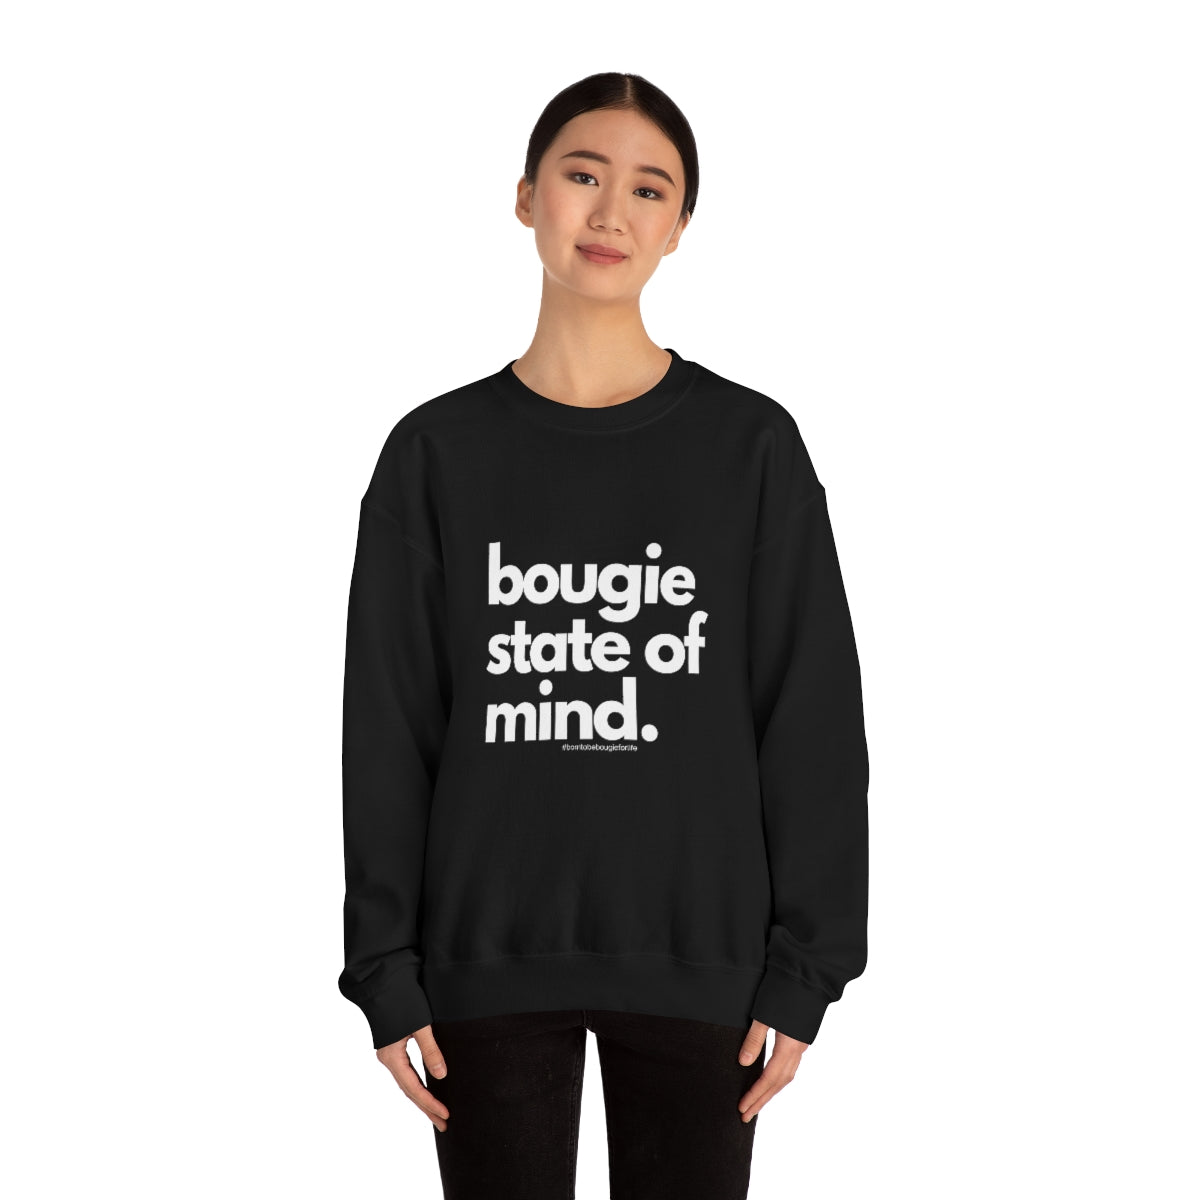 Bougie State of Mind Sweatshirt